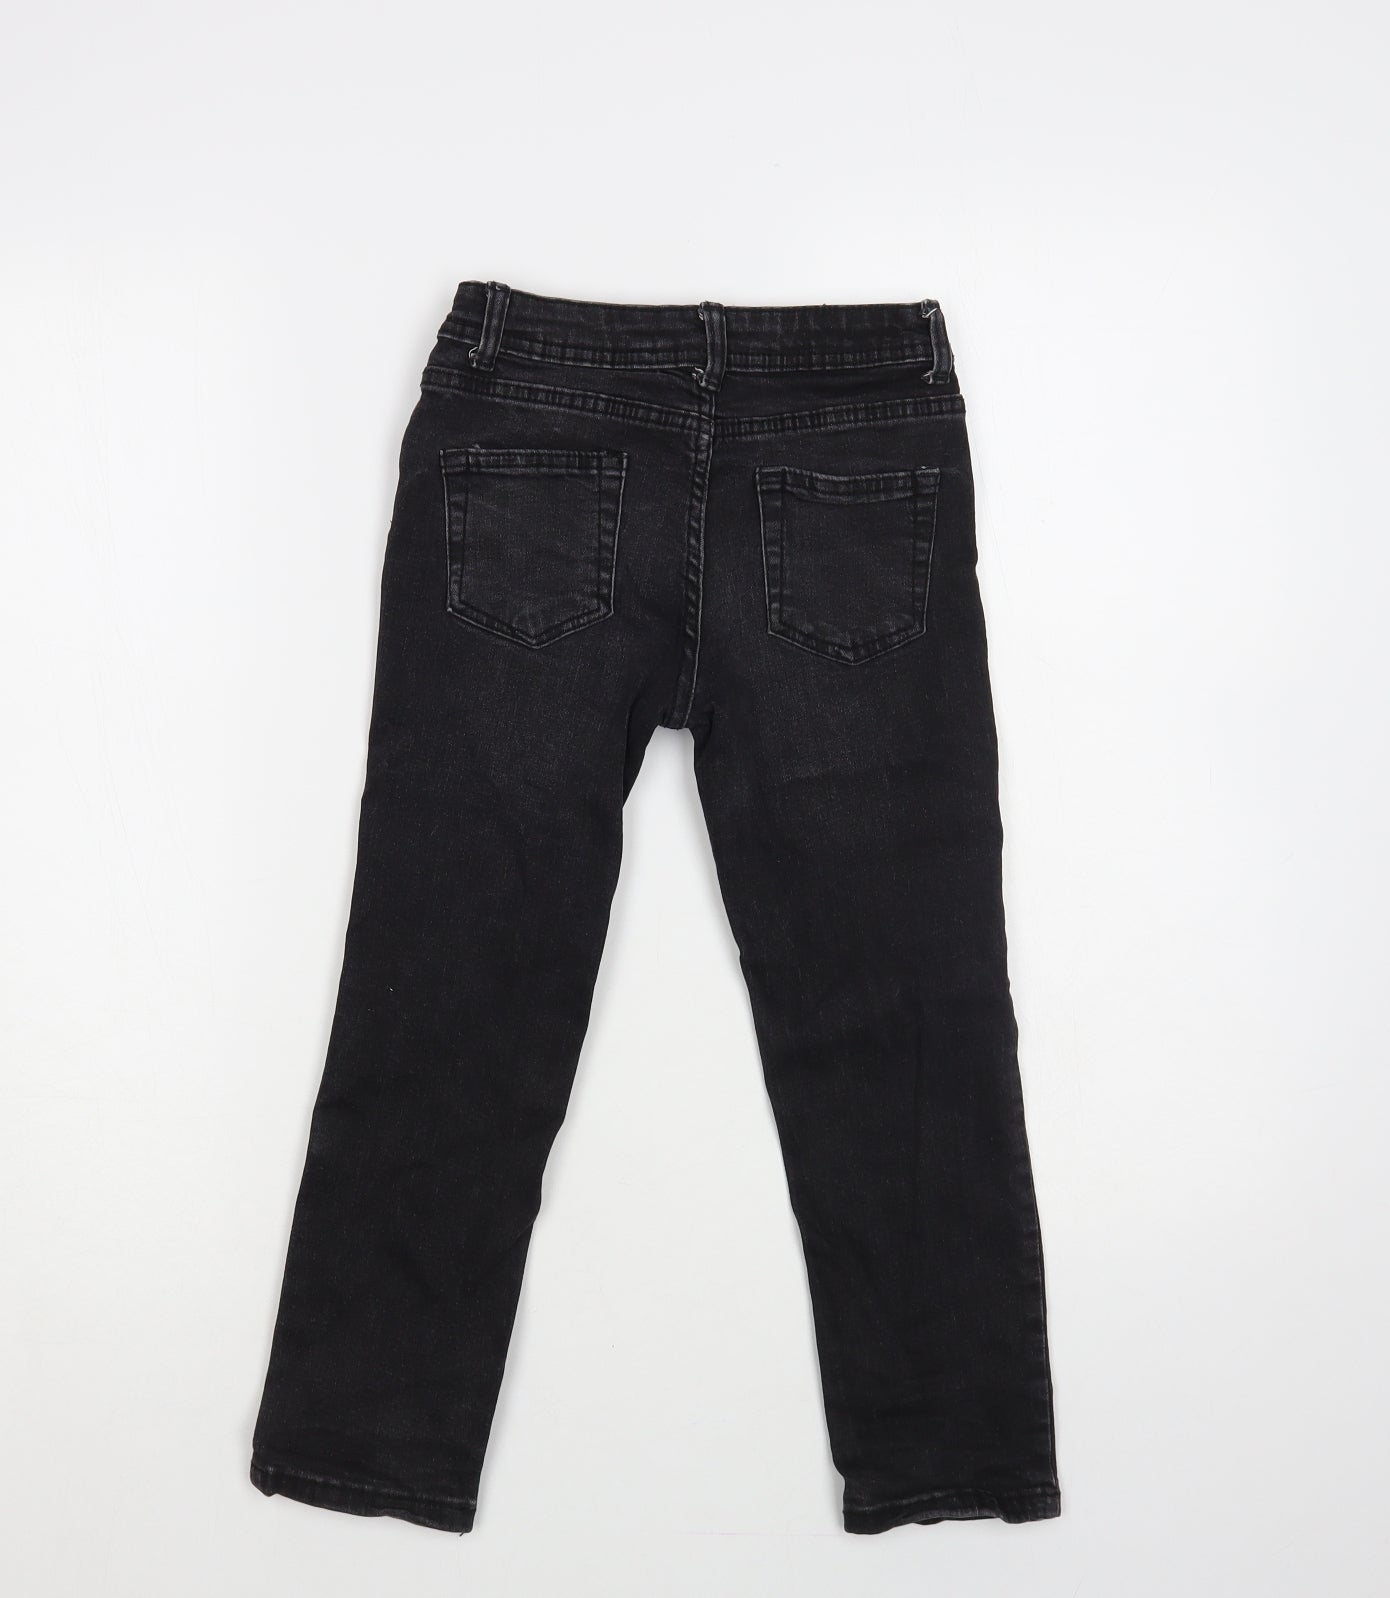 Denim & Co. Girls Black Cotton Skinny Jeans Size 6-7 Years Regular Button